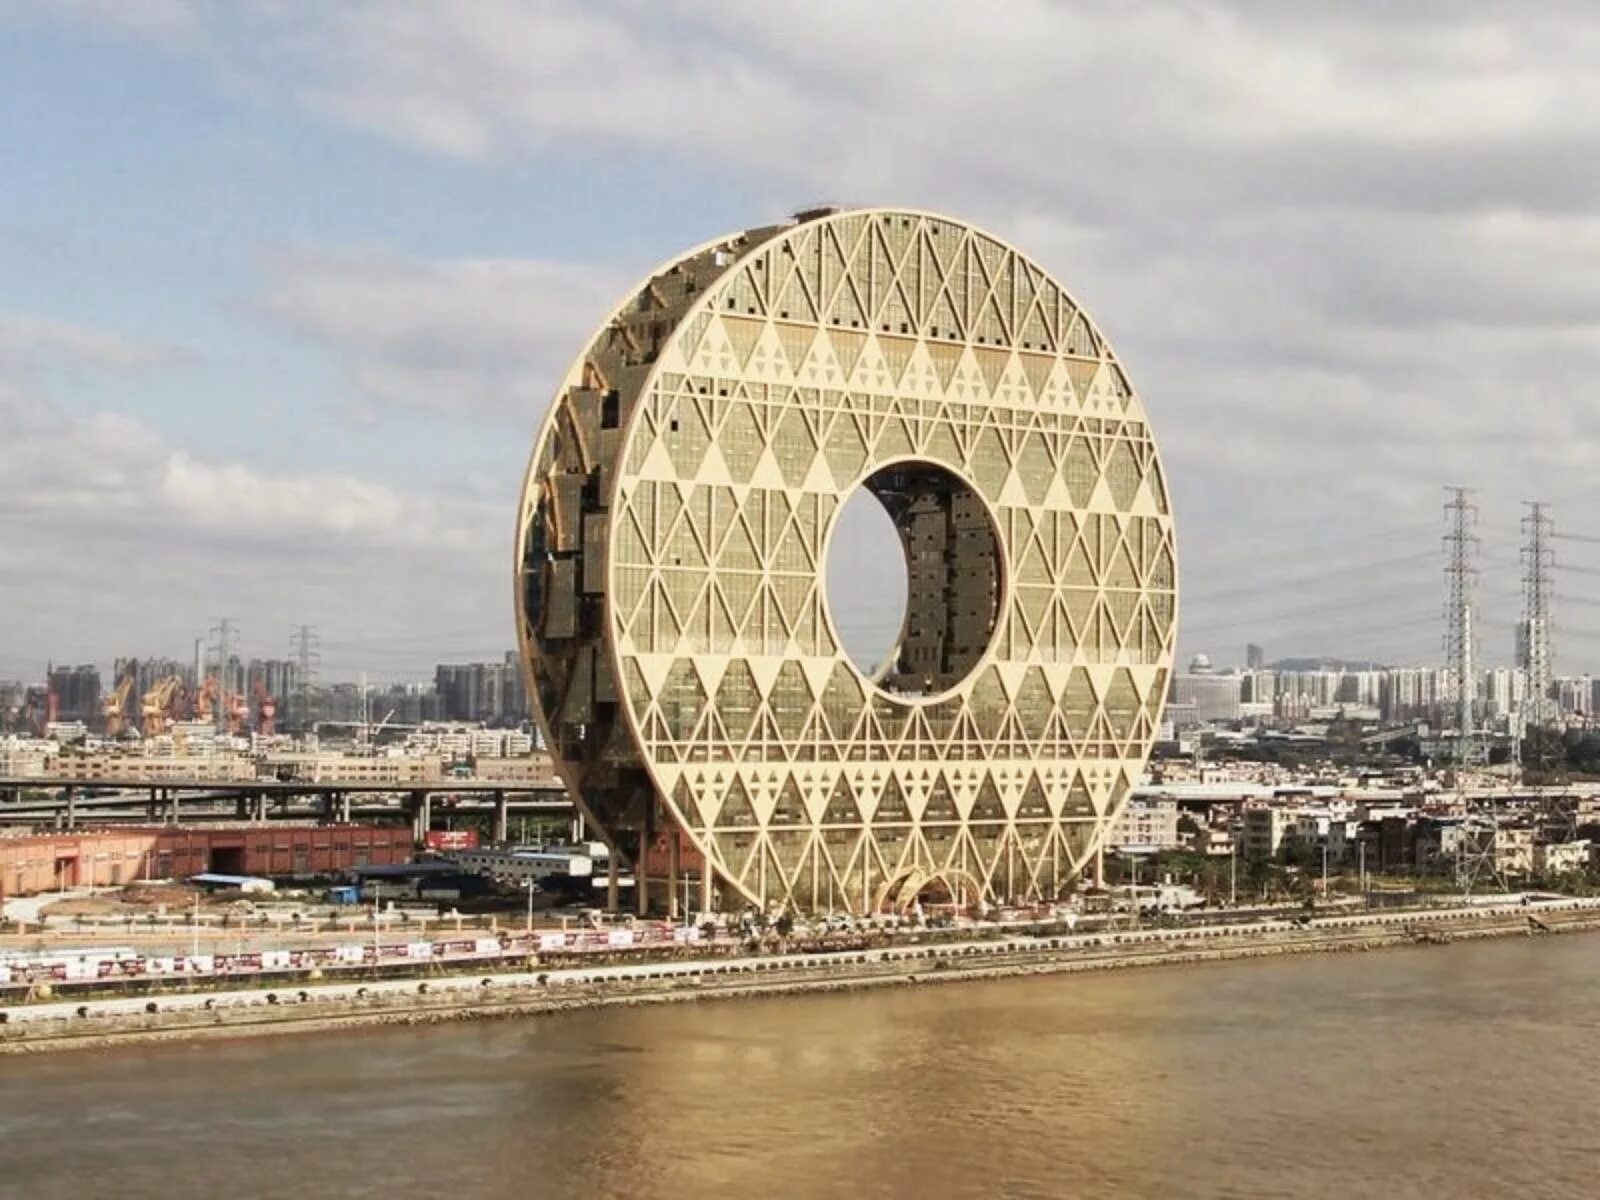 Гуанчжоу-юань. Гуанчжоу круг (Китай). Архитектура Гуанчжоу. Гуанчжоу юань небоскреб. В виде громадного